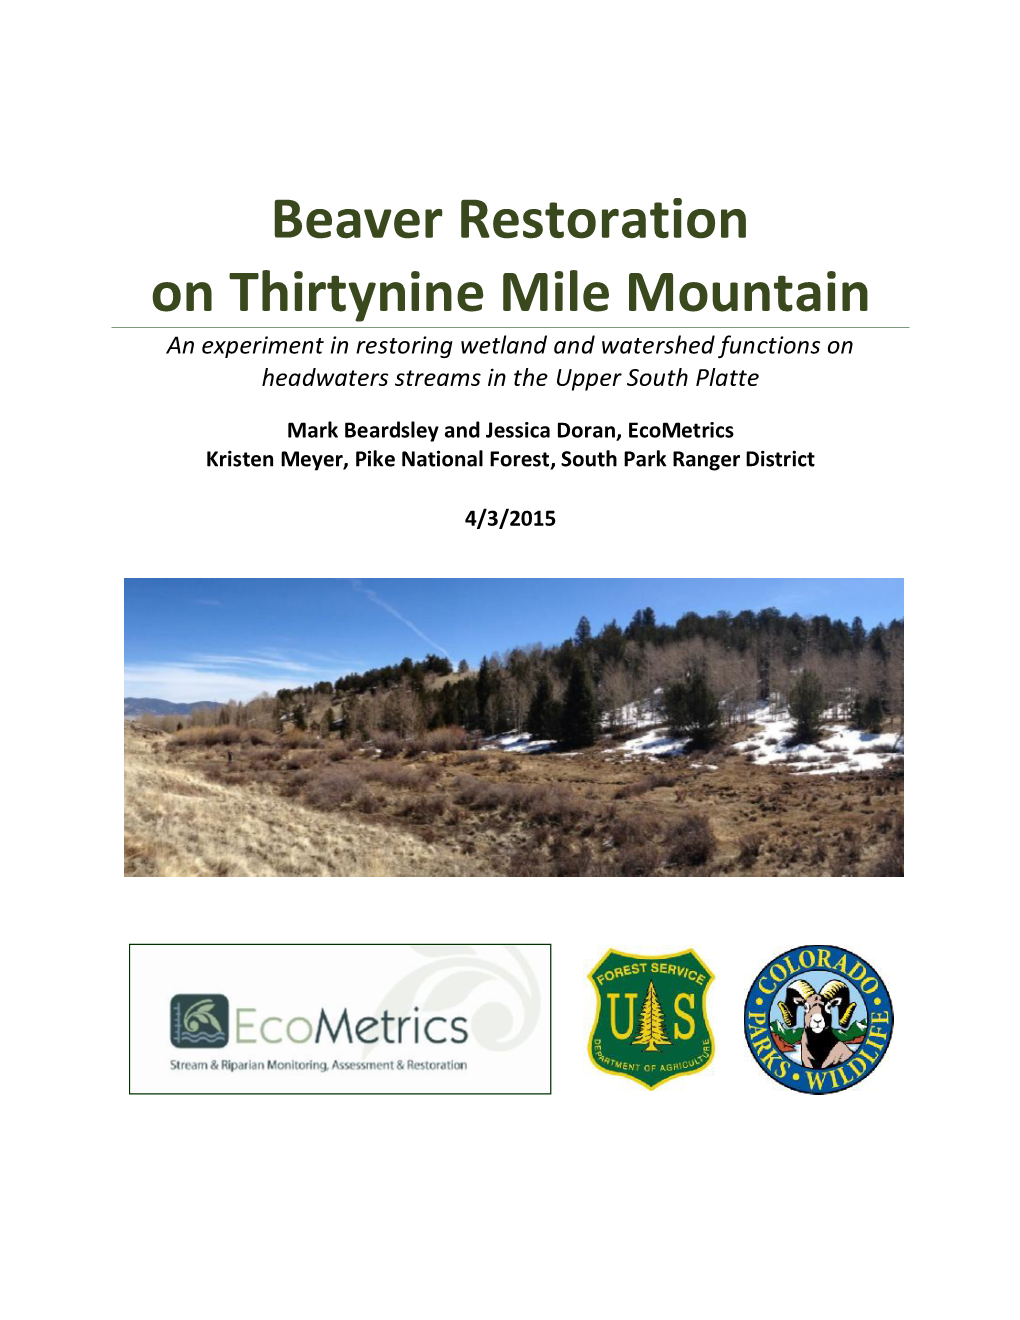 Beaver Reestablishment on 39-Mile Mountain